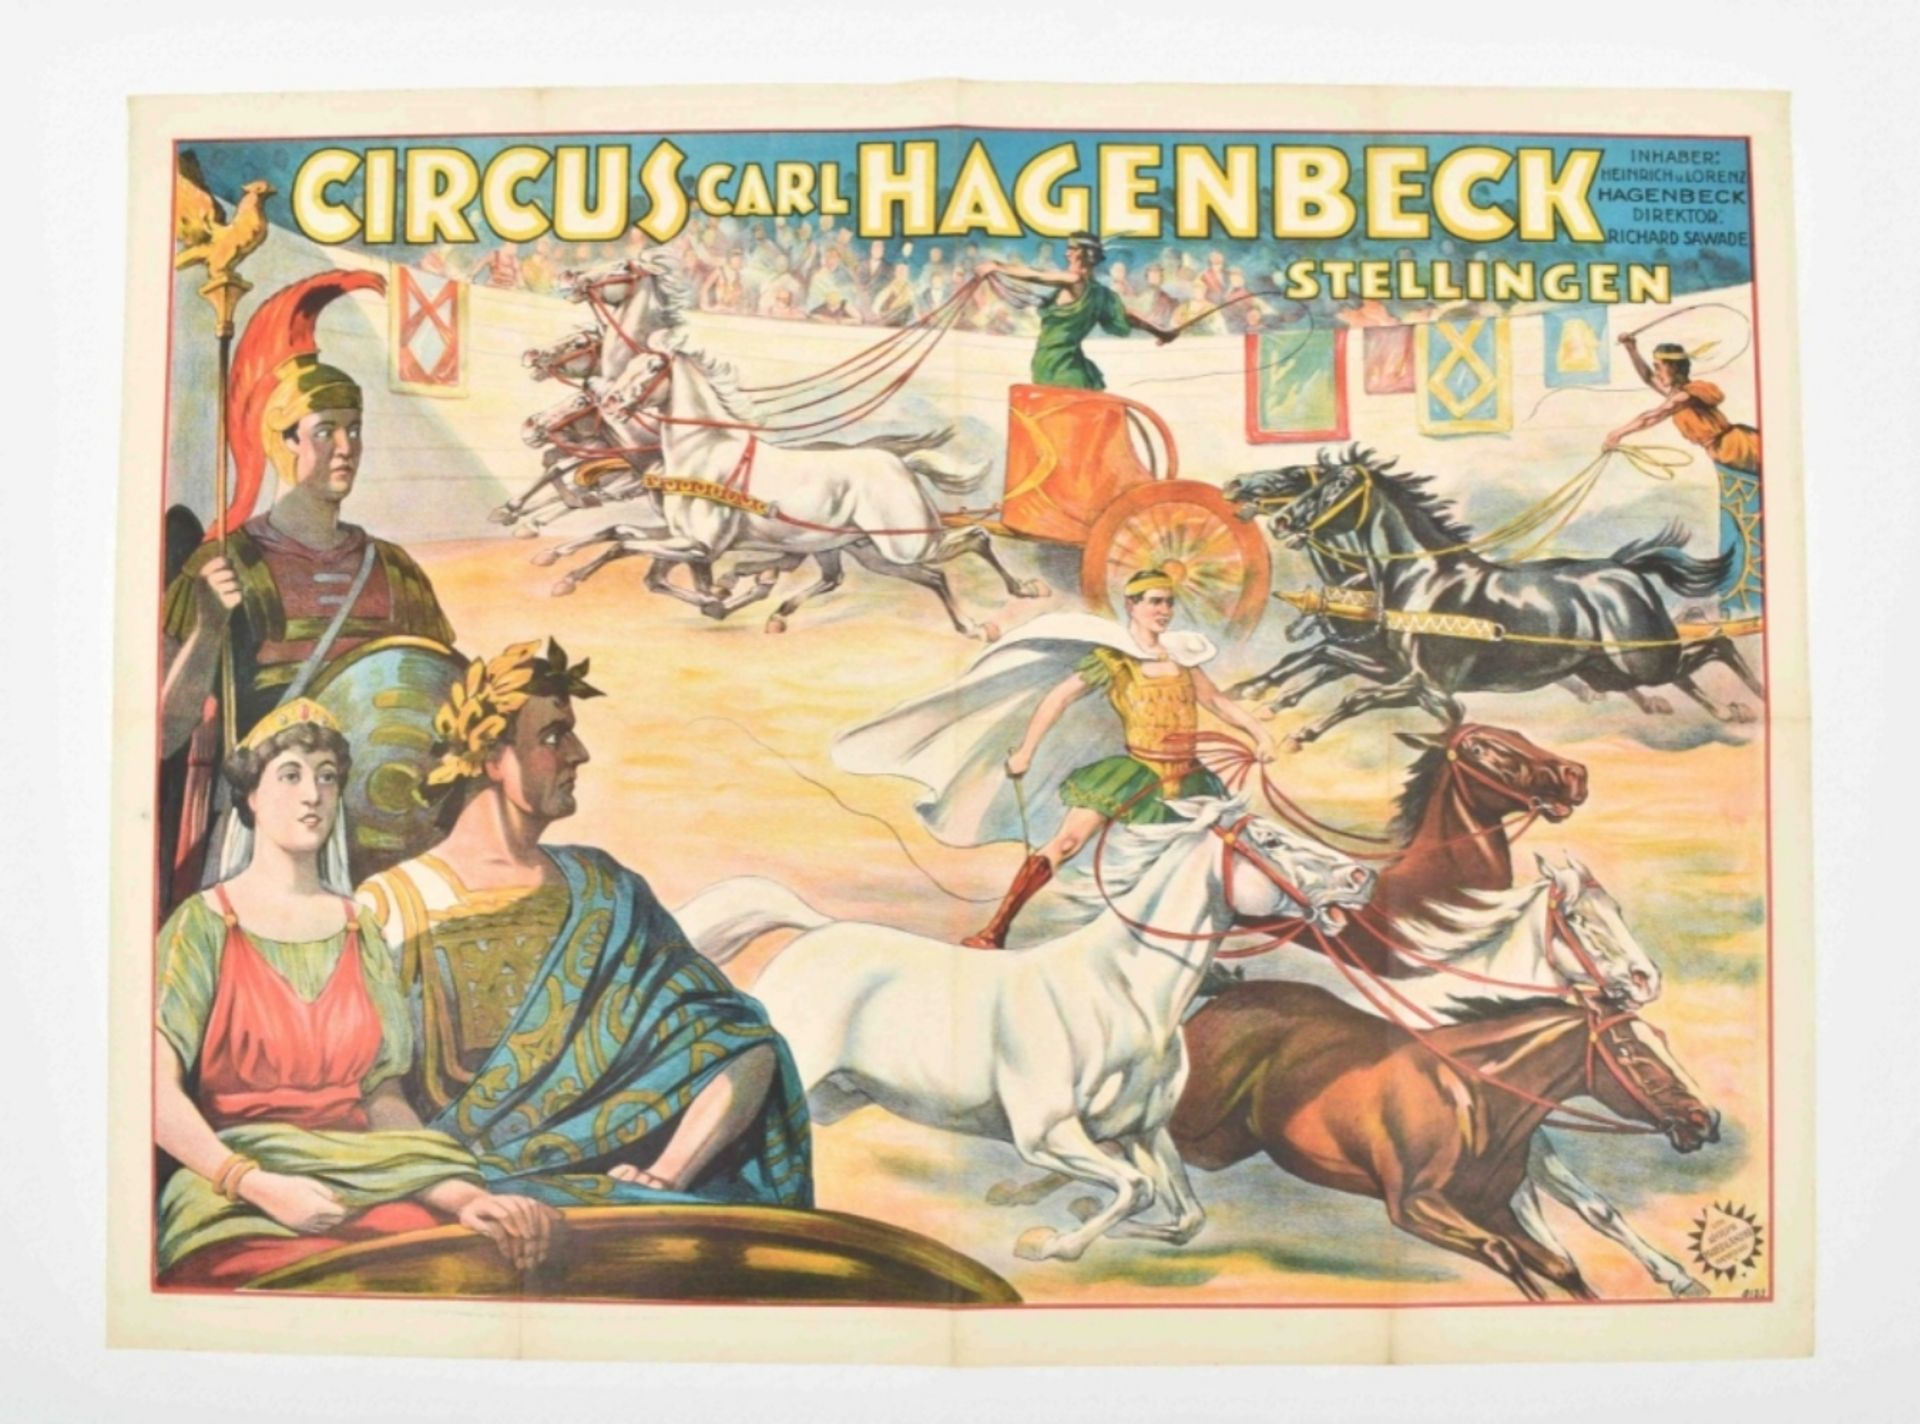 [Roman theatre] Circus Carl Hagenbeck - Image 8 of 8